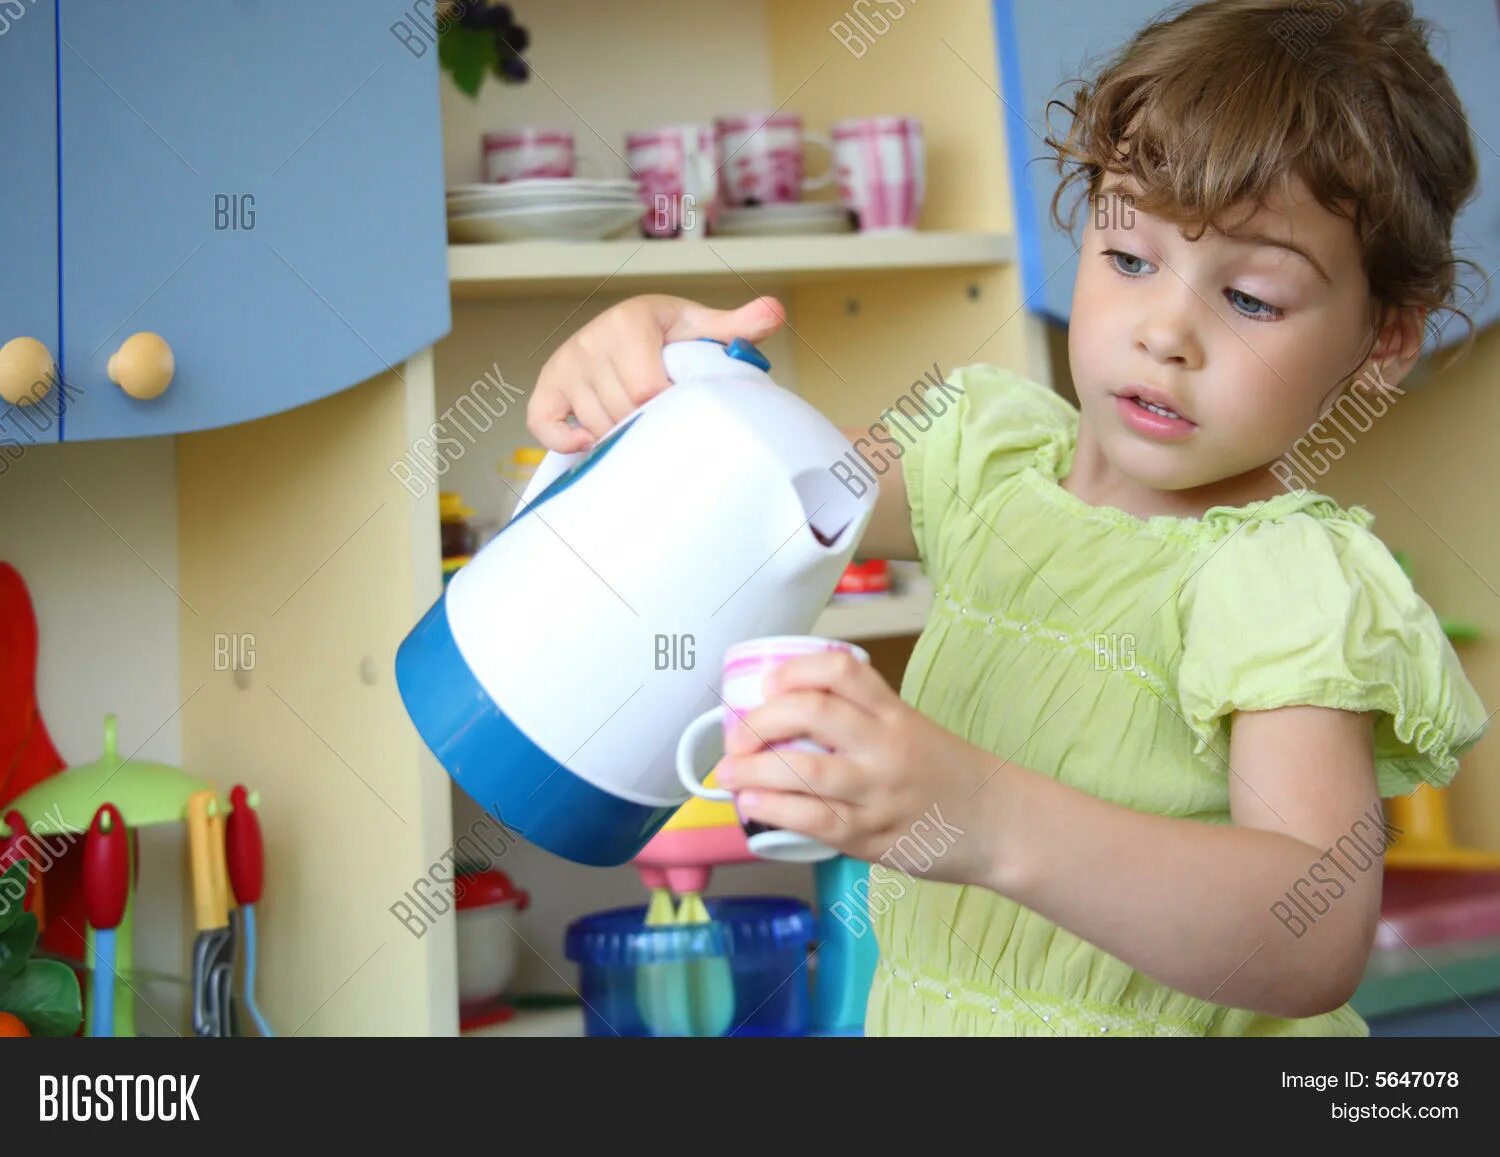 Налита завидно. Чайник для детей. Кипяток чайник ребенок. Чайник с кипятком. Девочка наливает воду в чашку.